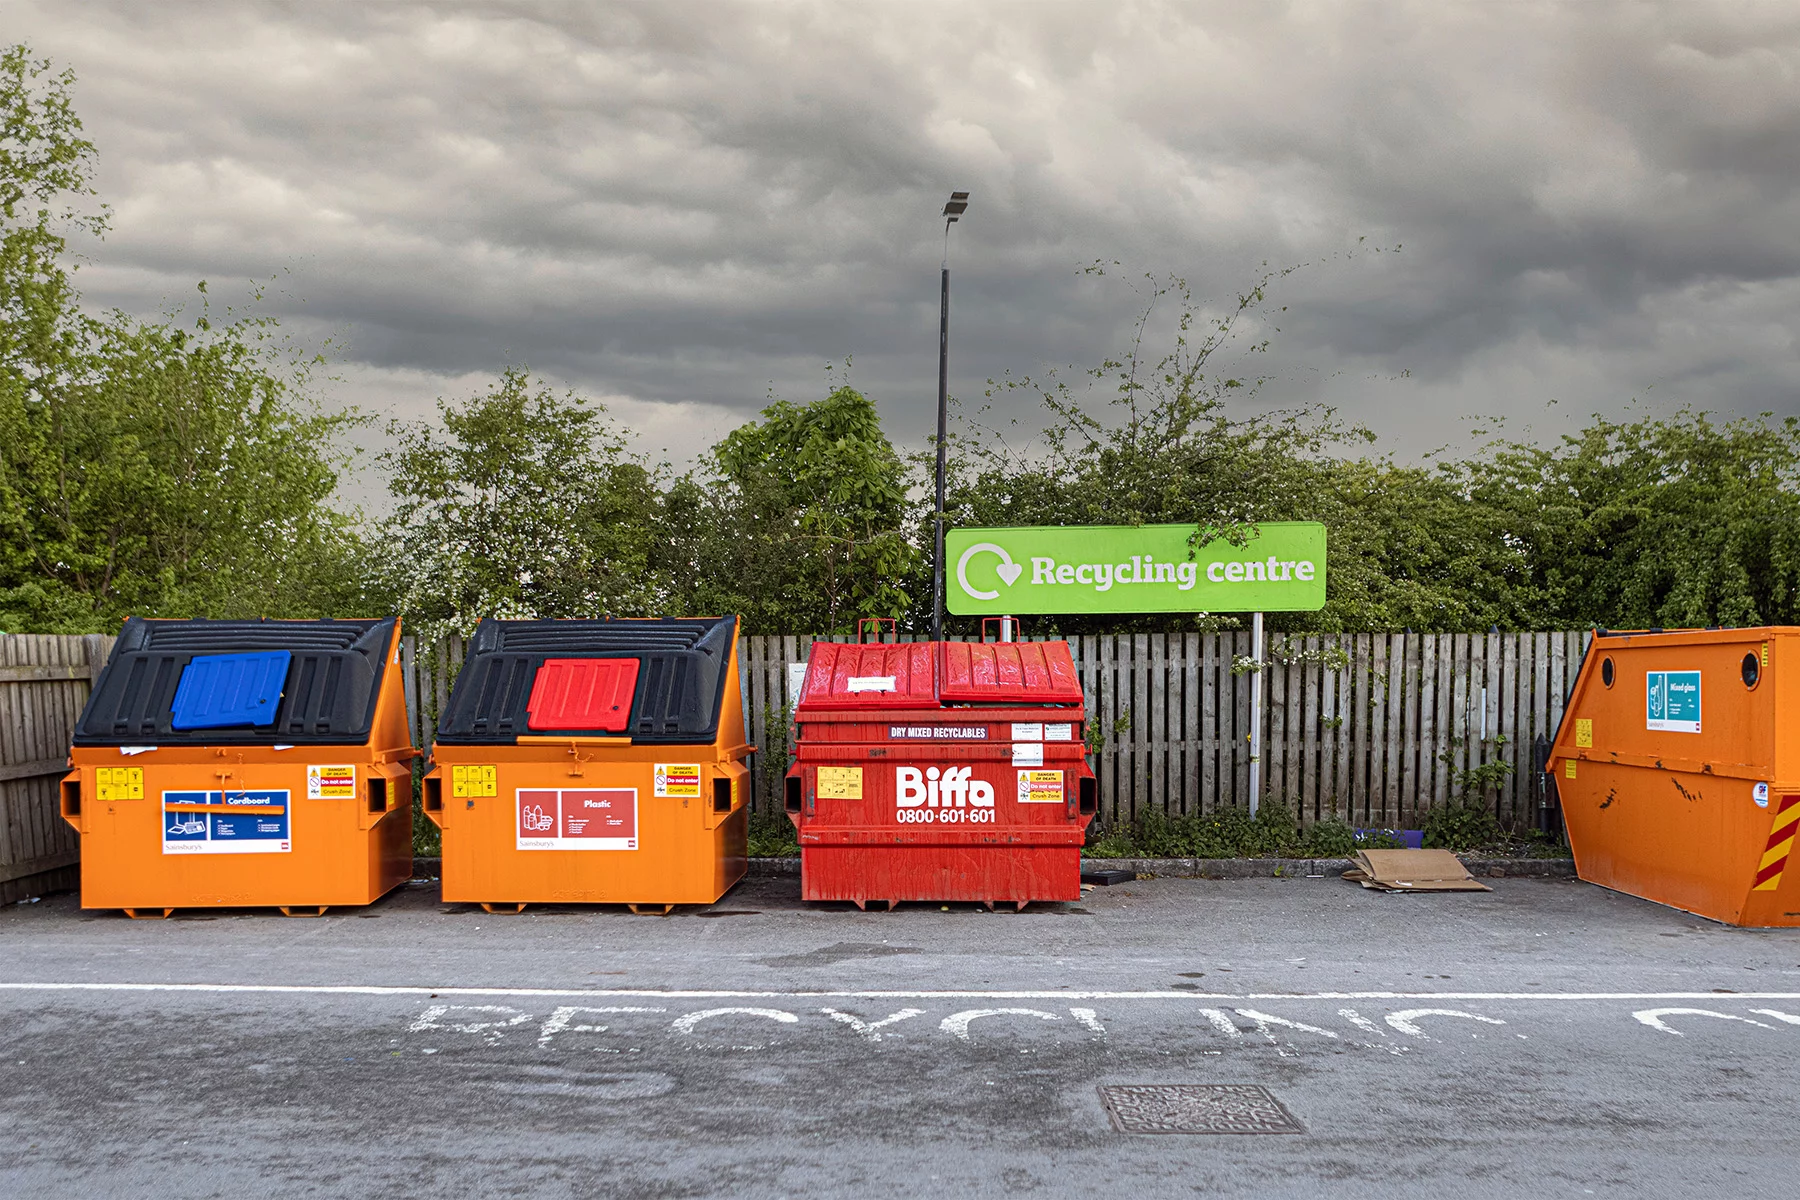 Recycling center in Royal Wootton Bassett, UK